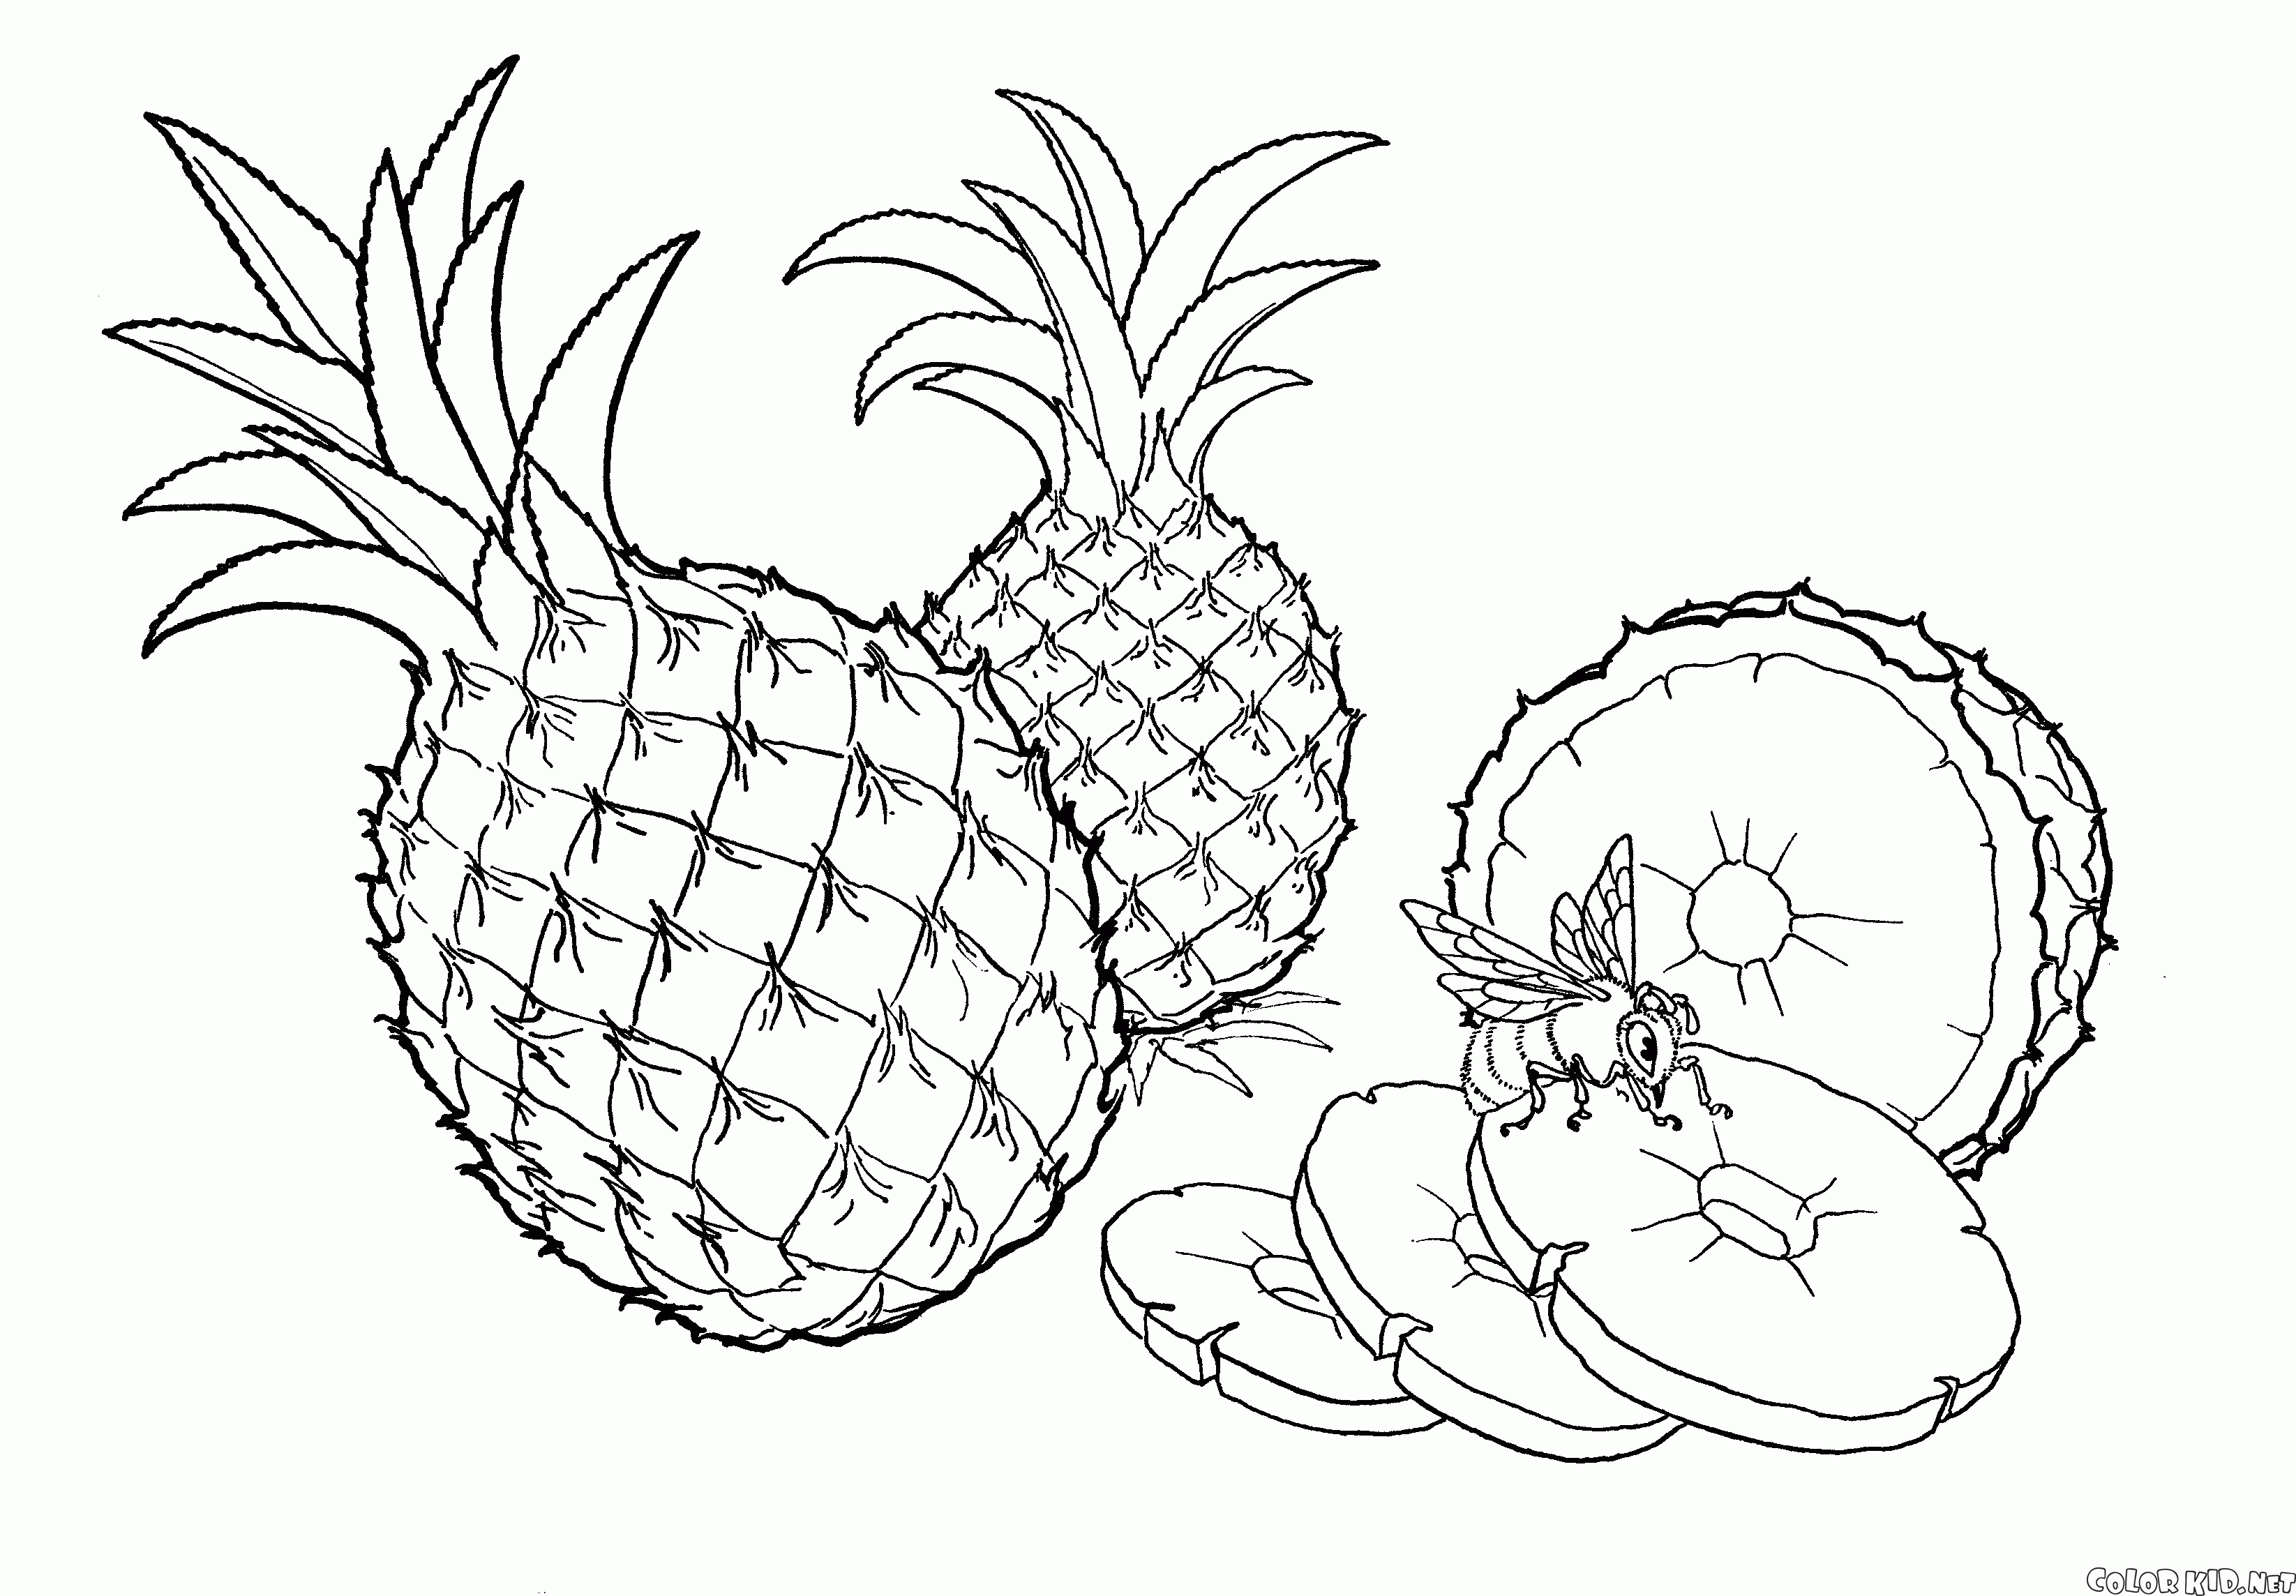 Natural Pineapple